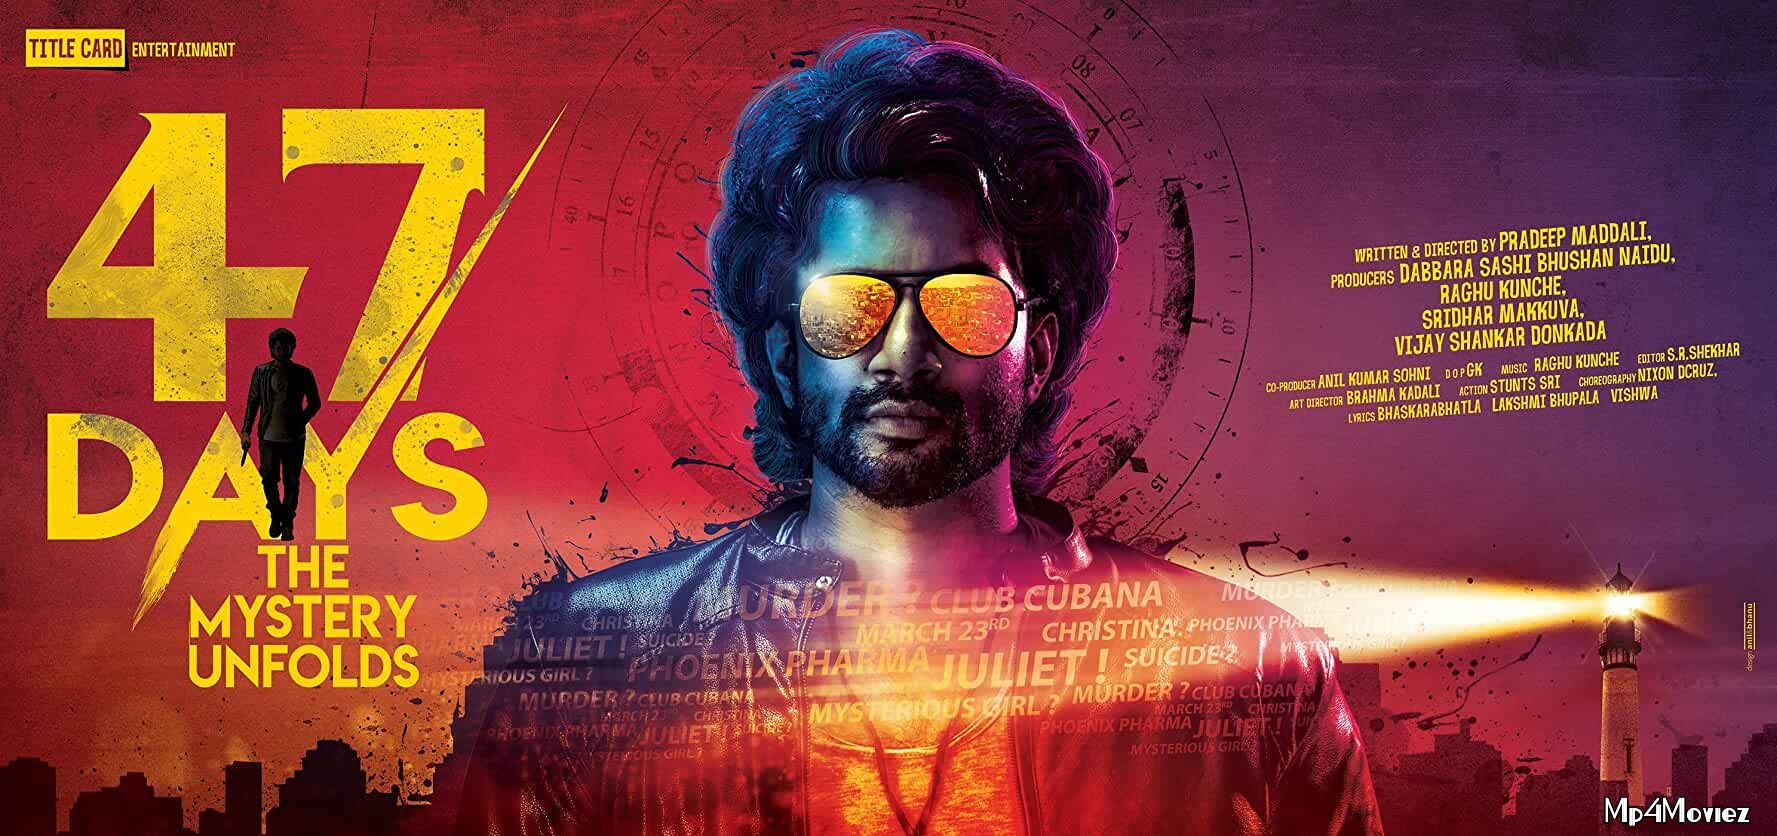 47 Days The Mystery Unfolds 2020 Telugu Full Movie download full movie